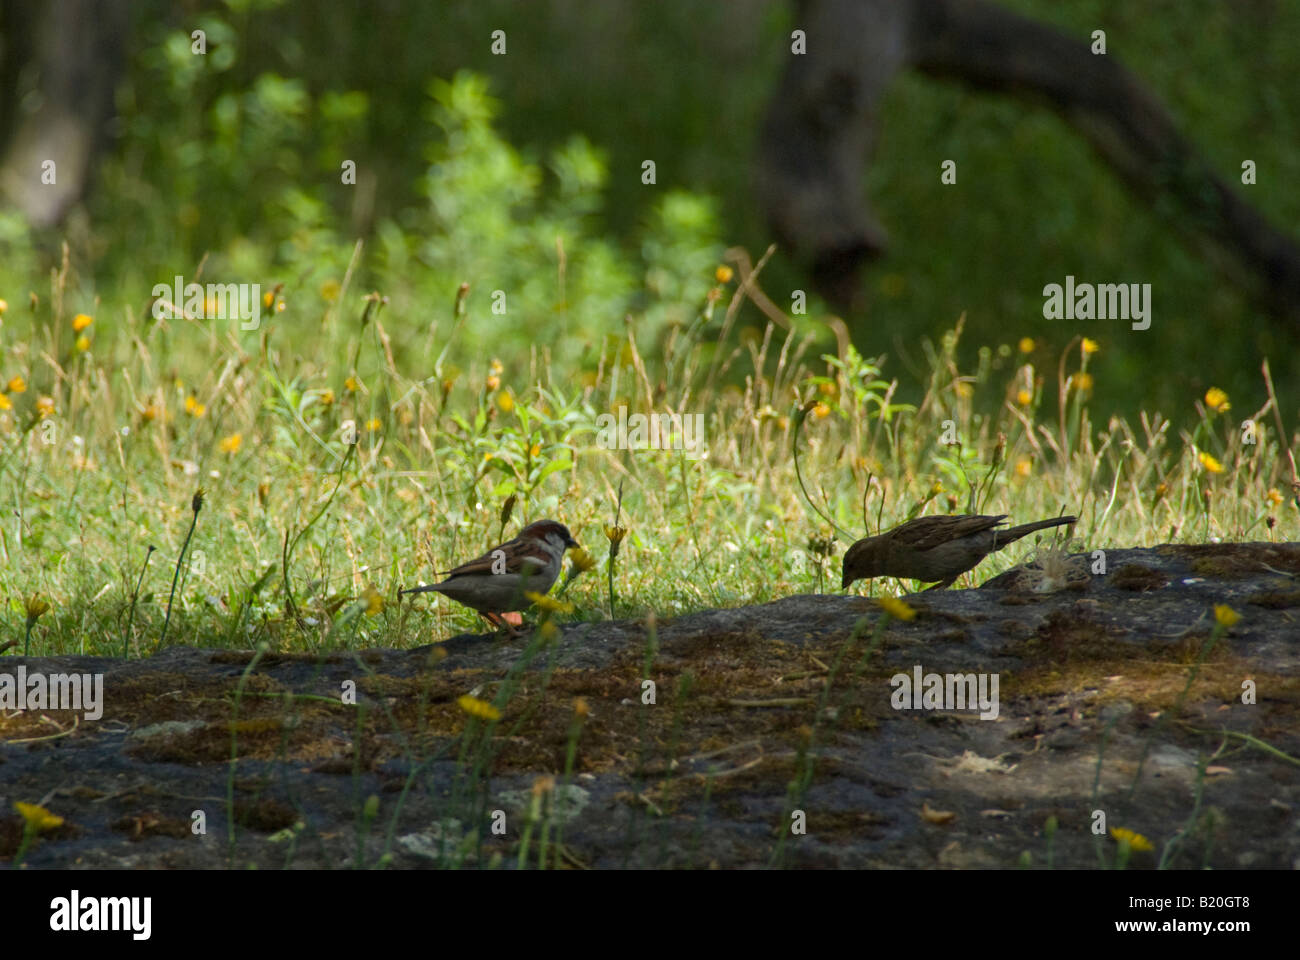 Two sparrows feeding on rocky ground Stock Photo